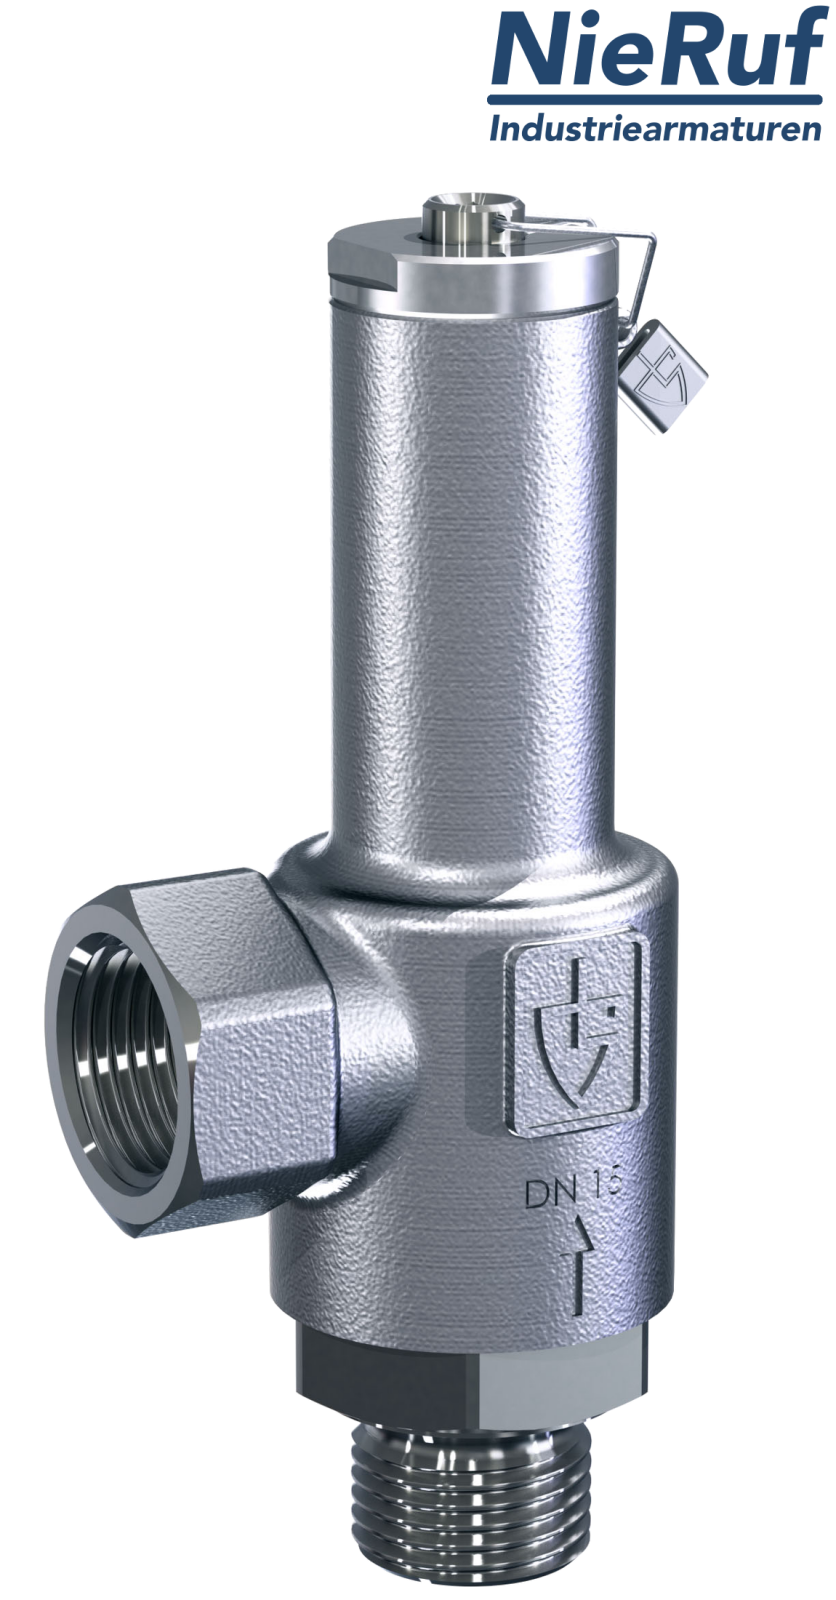 pressure regulator valve 3/8" inch fm UV04 stainless steel AISI 316L 0,5 - 2,5 bar